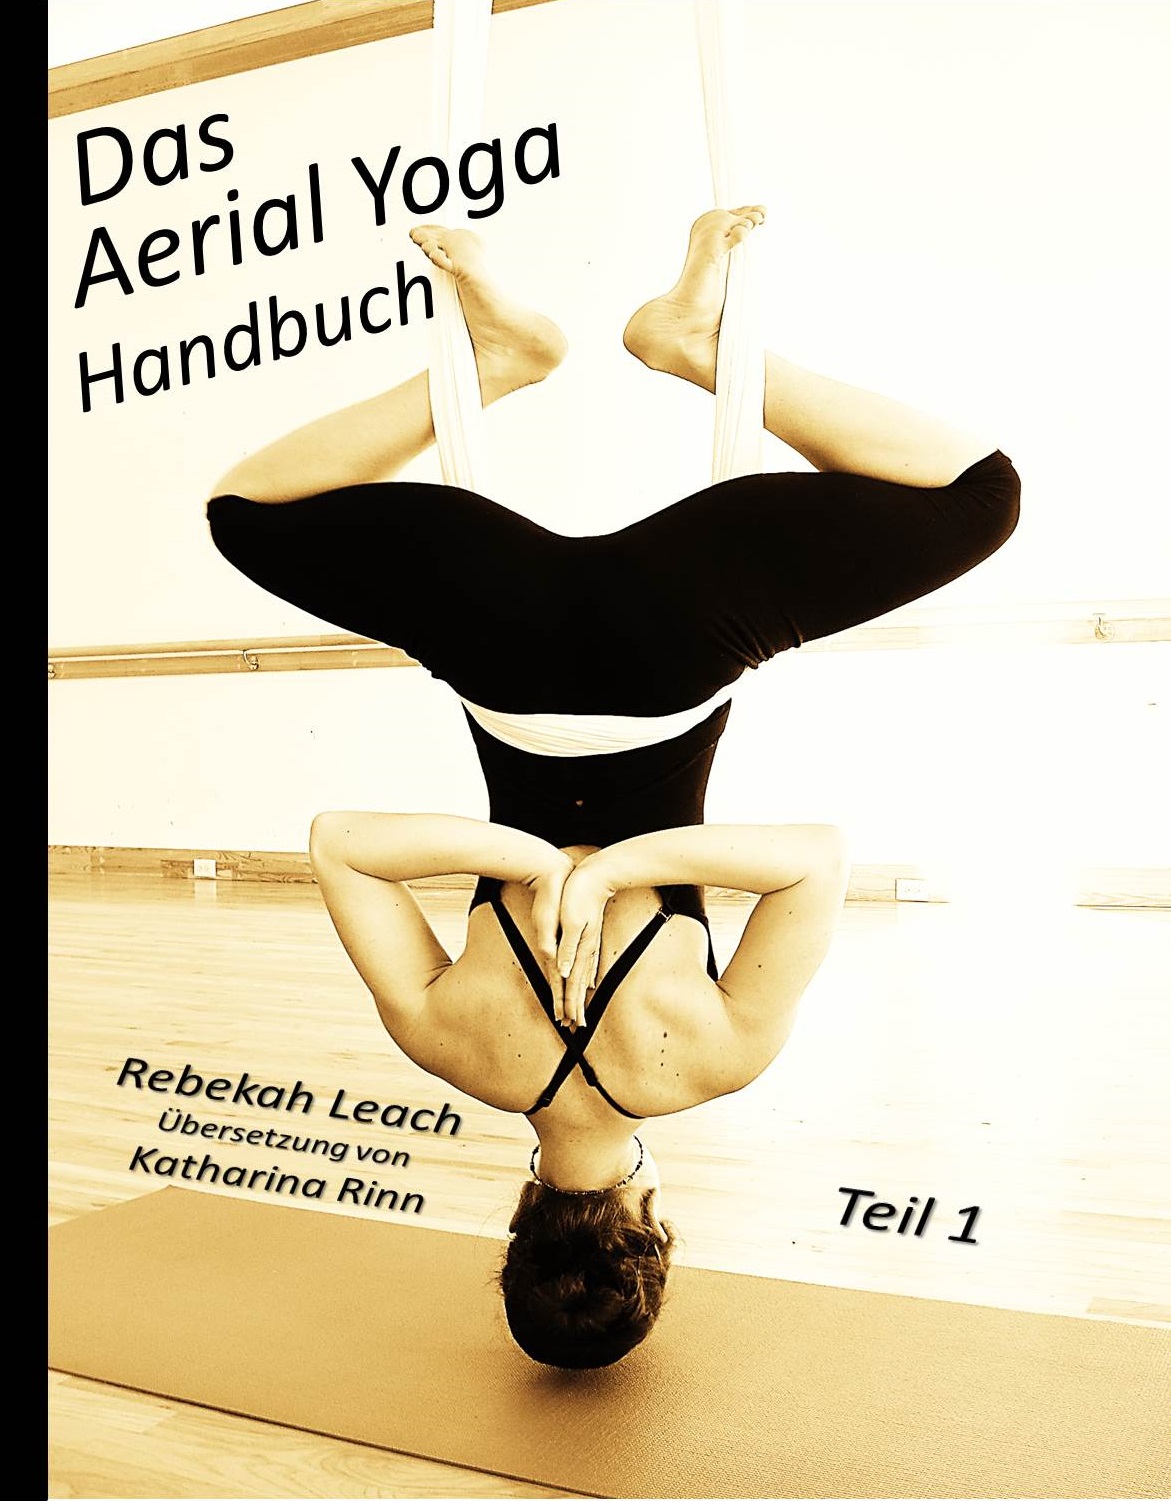 Das Aerial Yoga Handbuch Teil 1 is Here! www.aerialdancing pic image